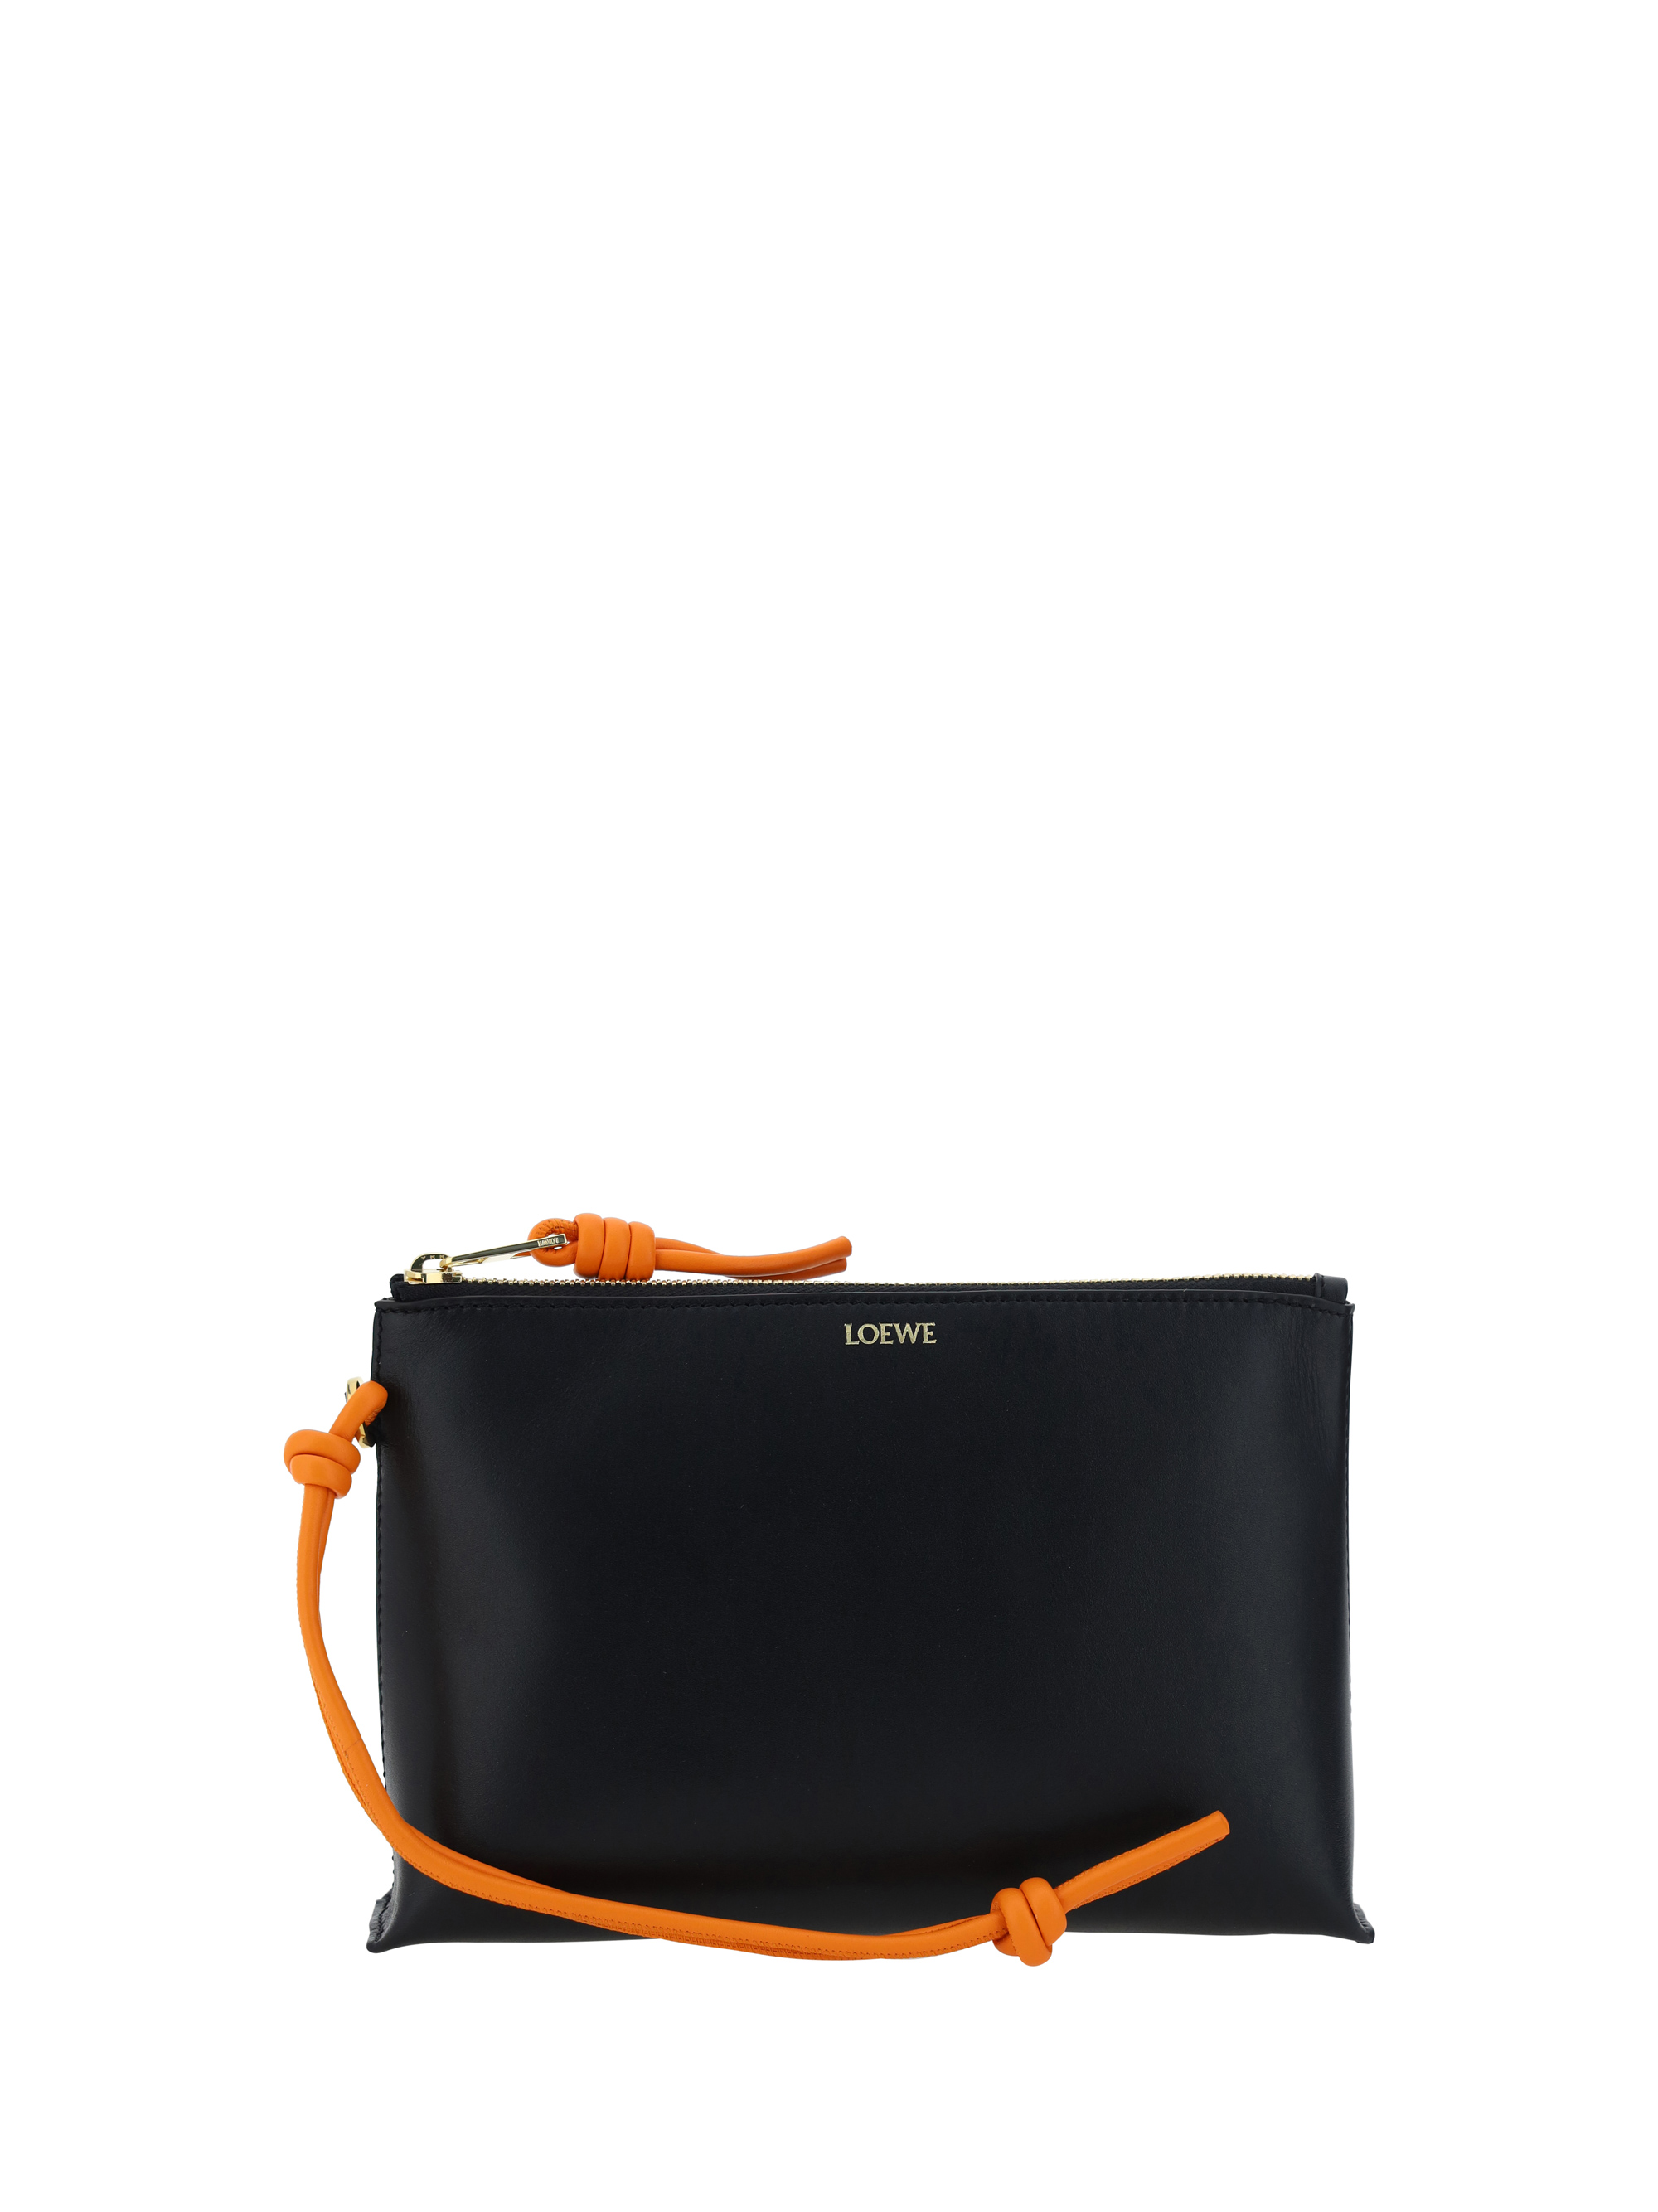 Loewe Knot Pouch Bag In Black/bright Orange